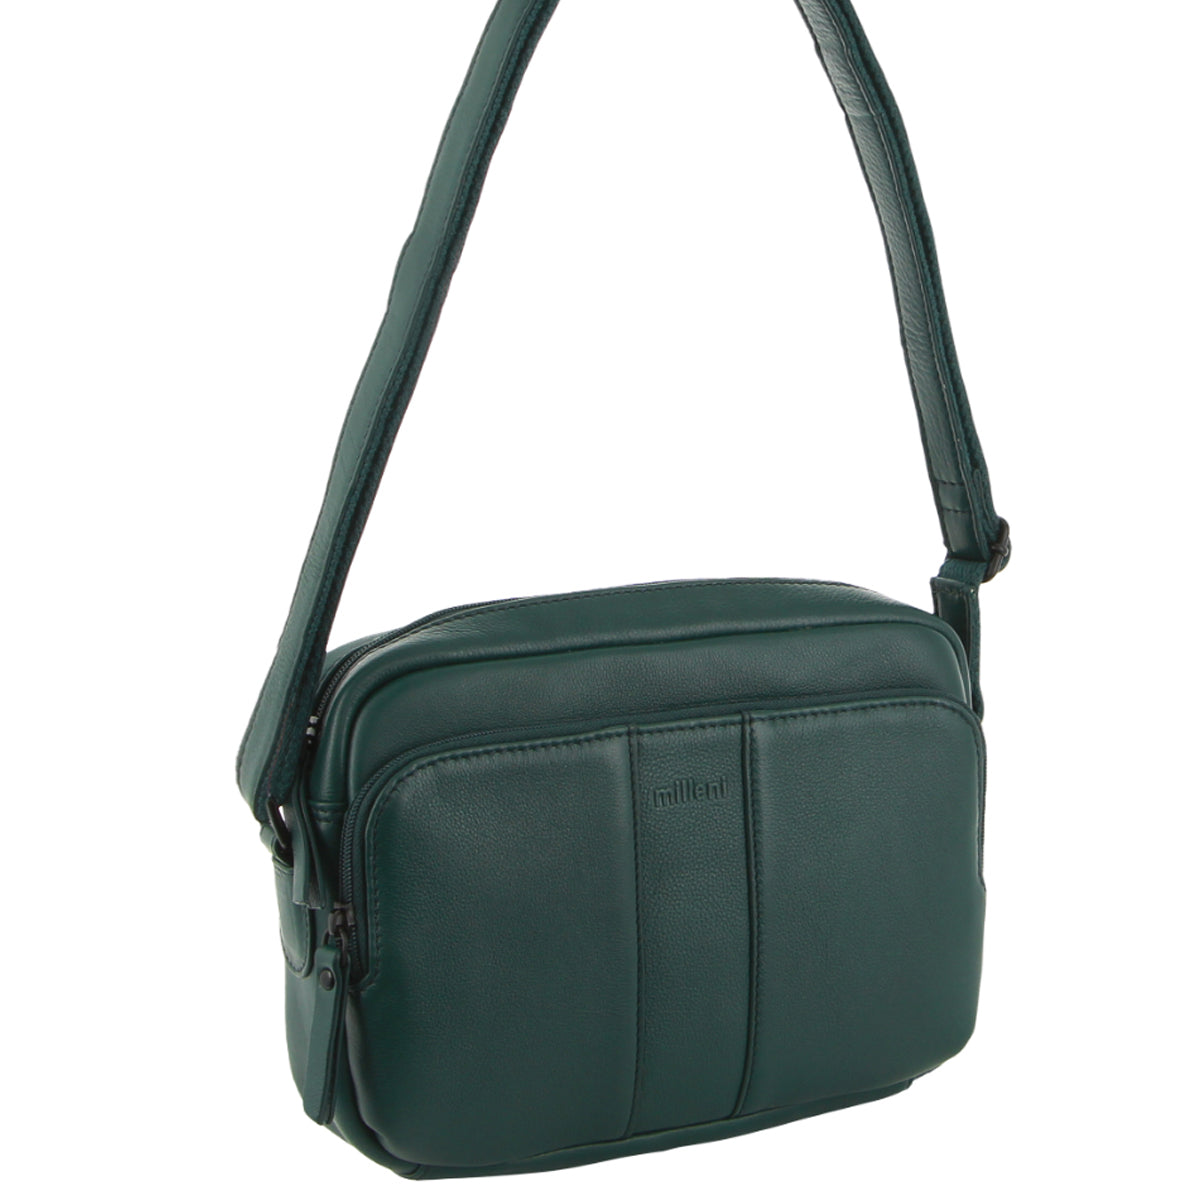 Milleni - NL3871 Small leather sidebag - Zircon